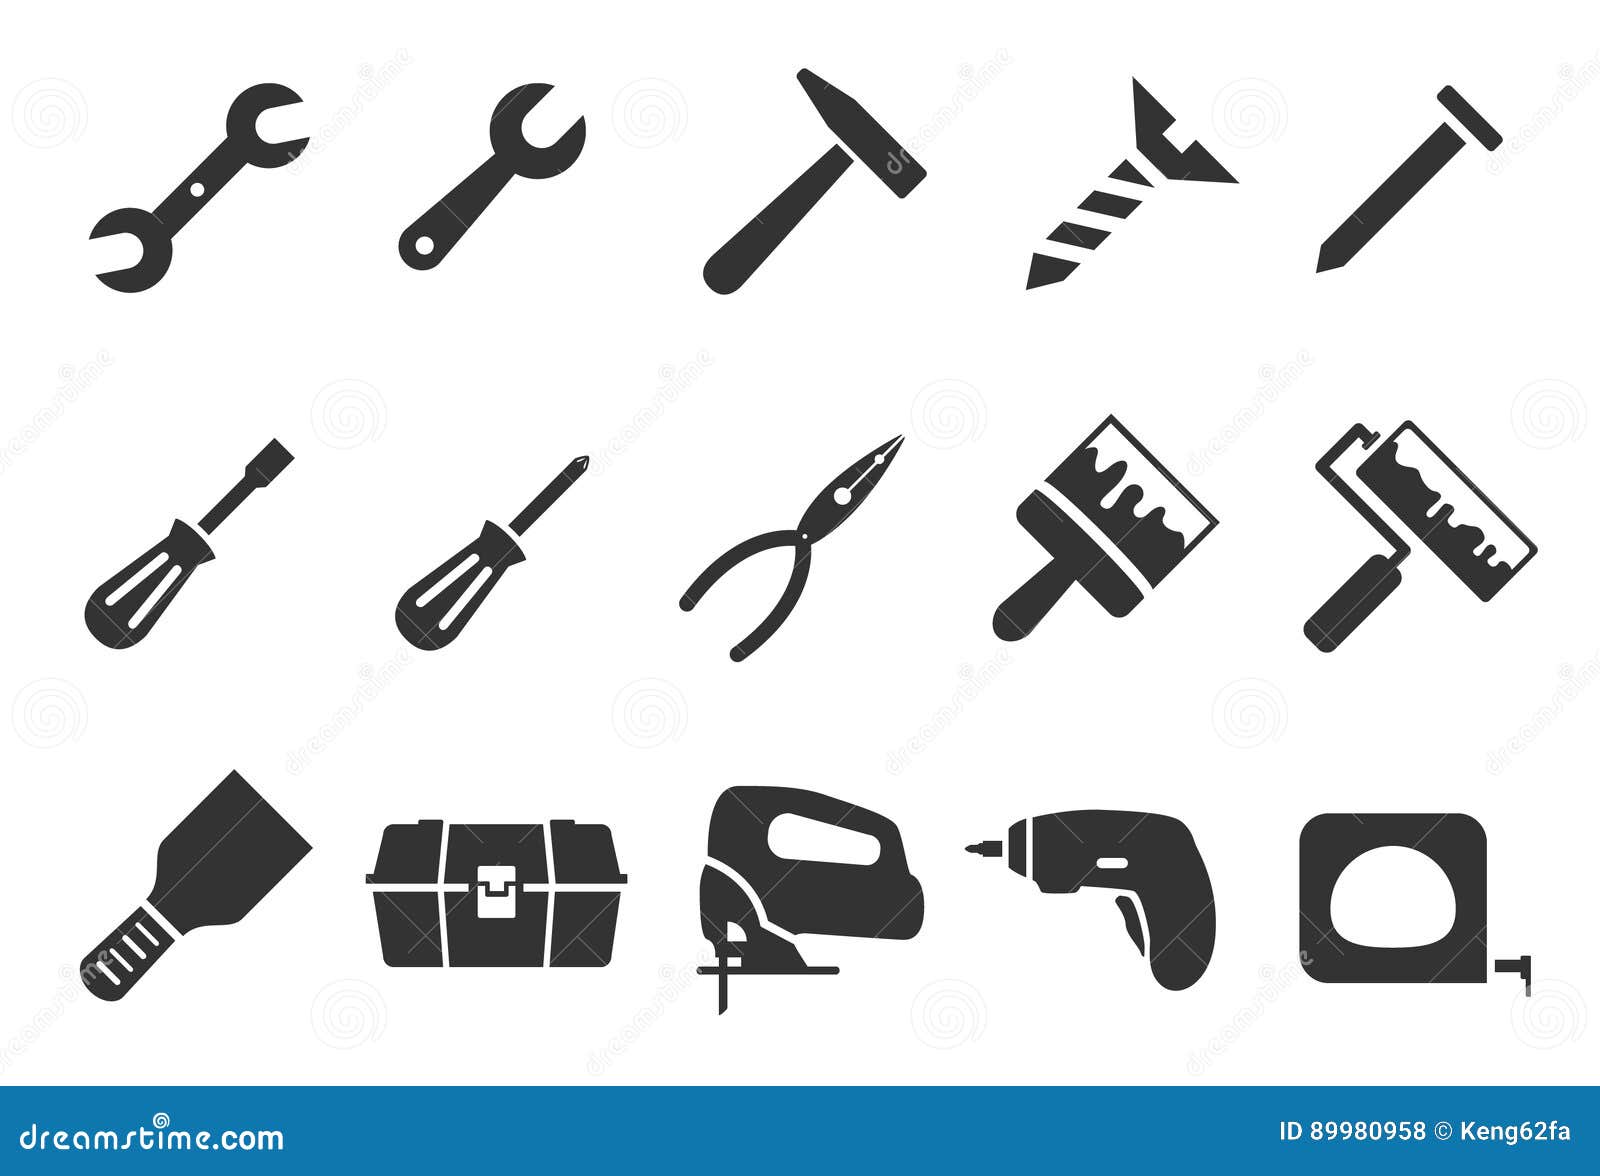 tool icons